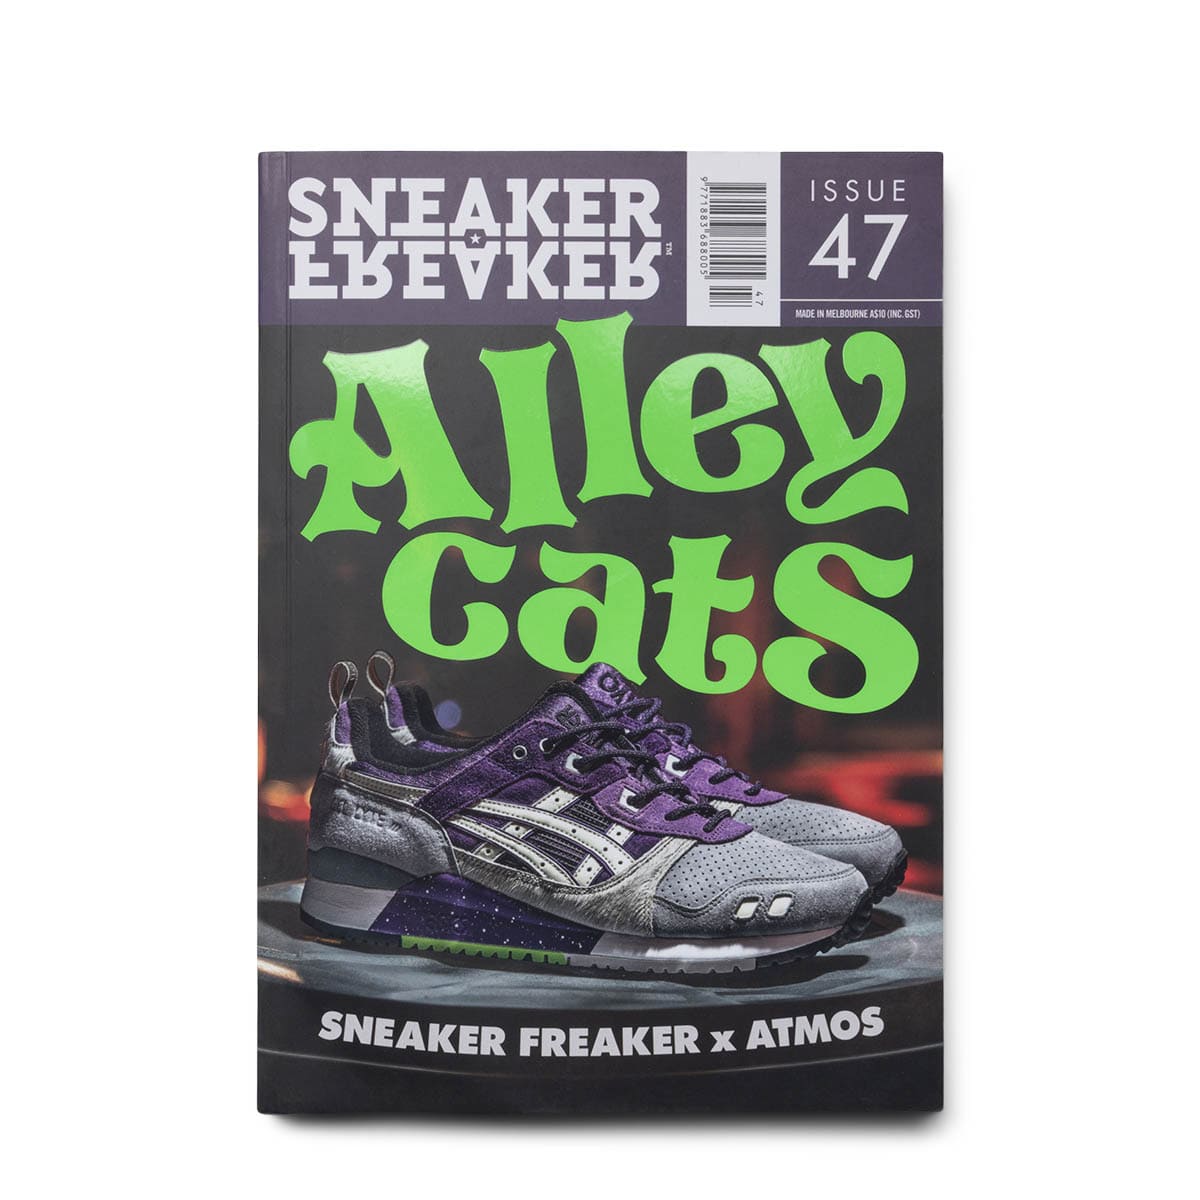 Marketplace Odds & Ends ALLEY CATS / O/S SNEAKER FREAKER #47